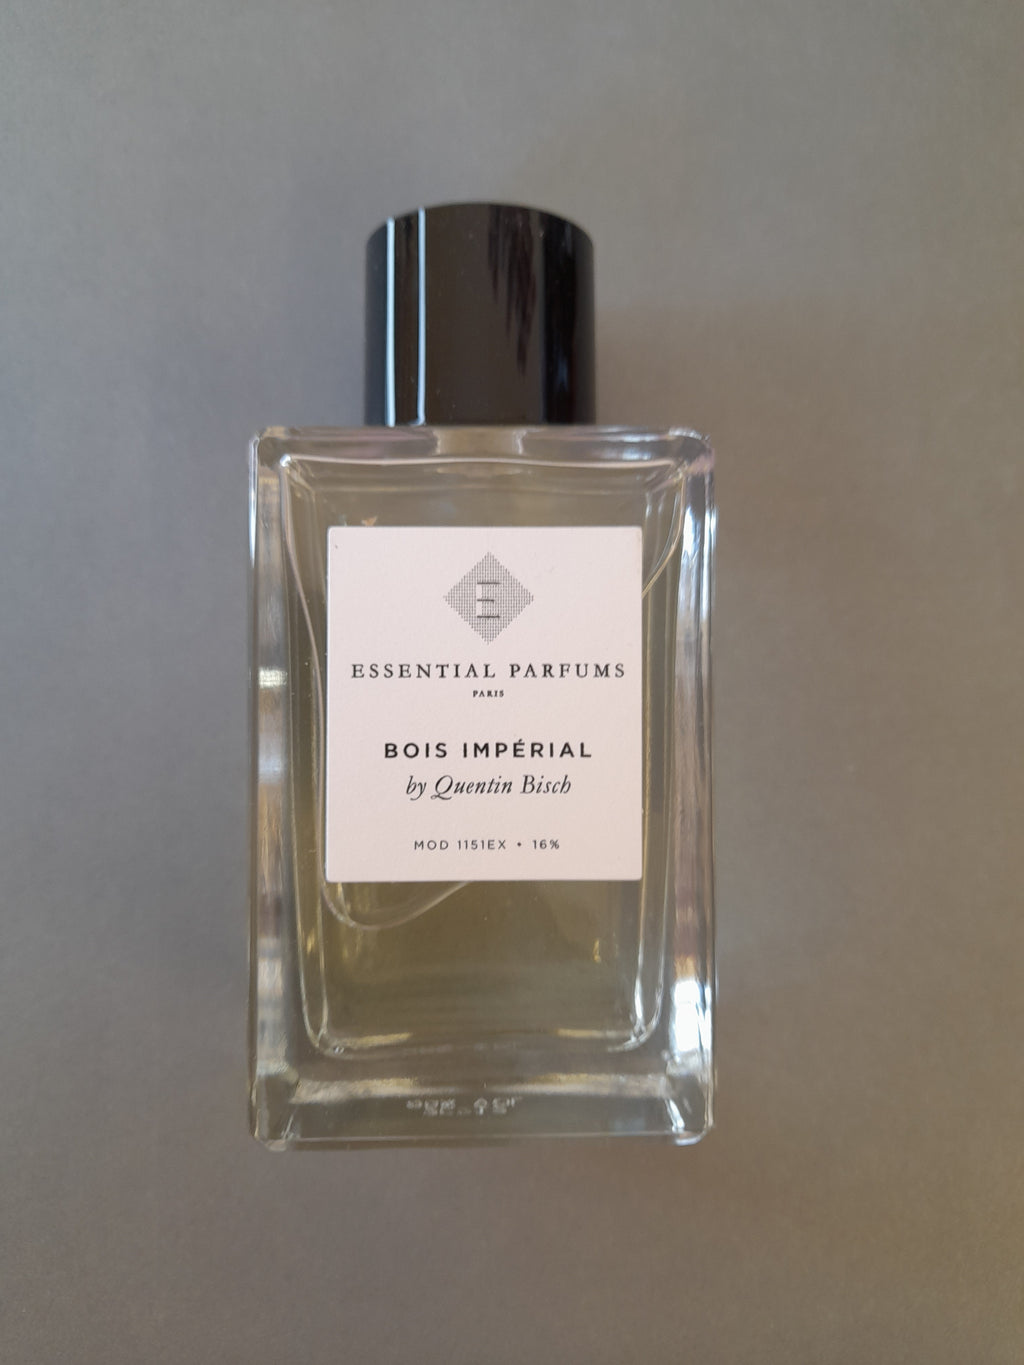 Essential Parfums Bois Imperiale